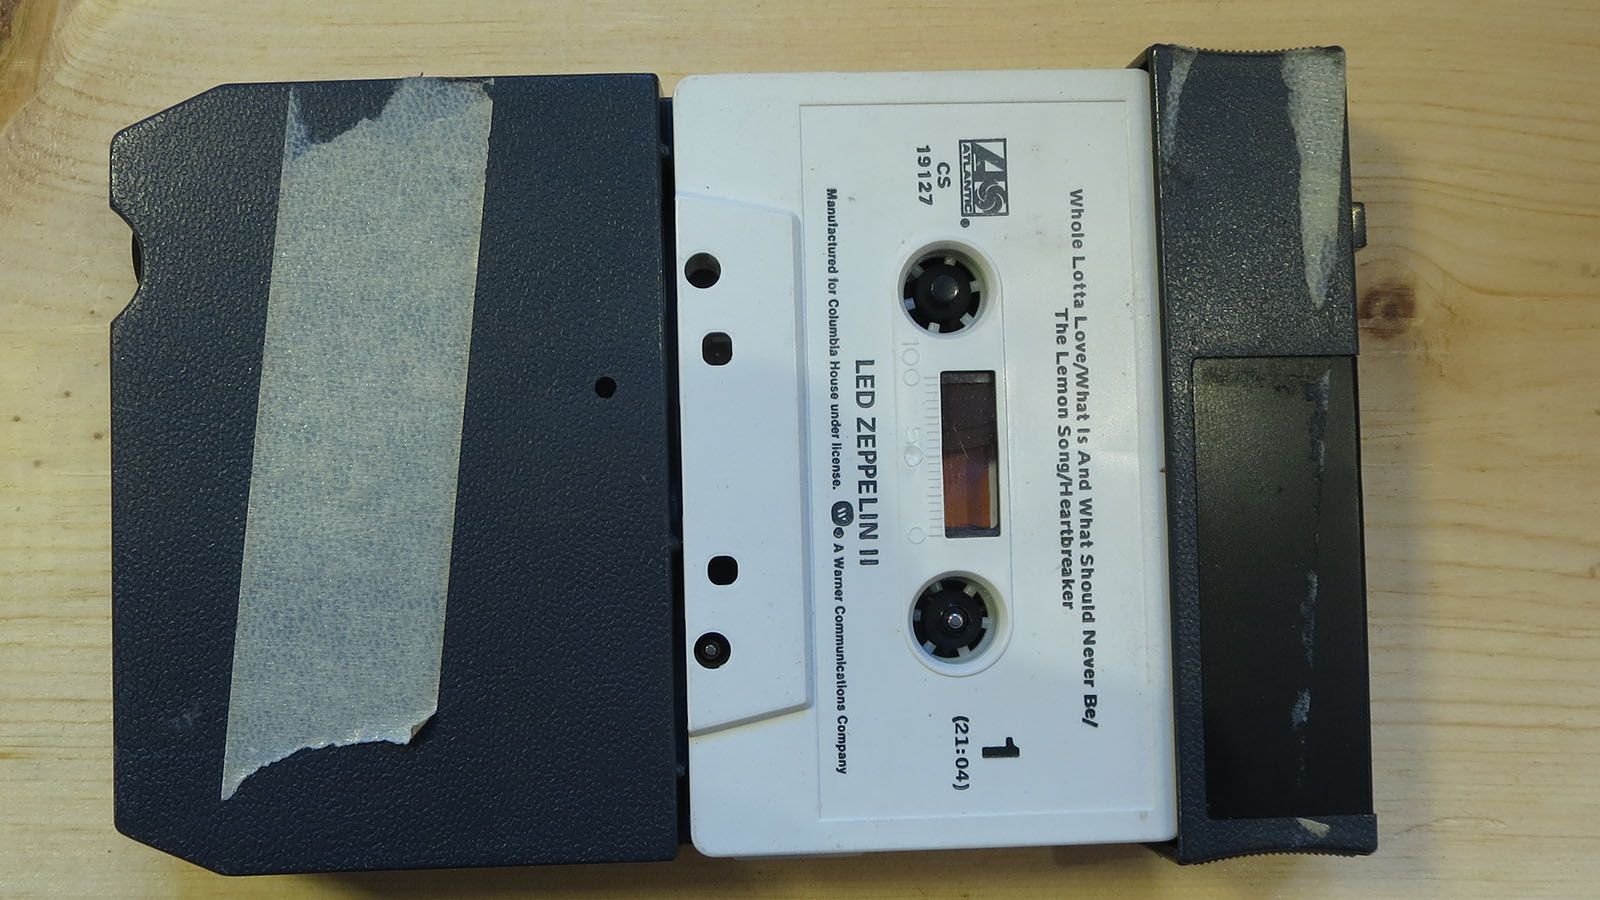 8 Track Tapes vs. Cassette: A Comprehensive Guide